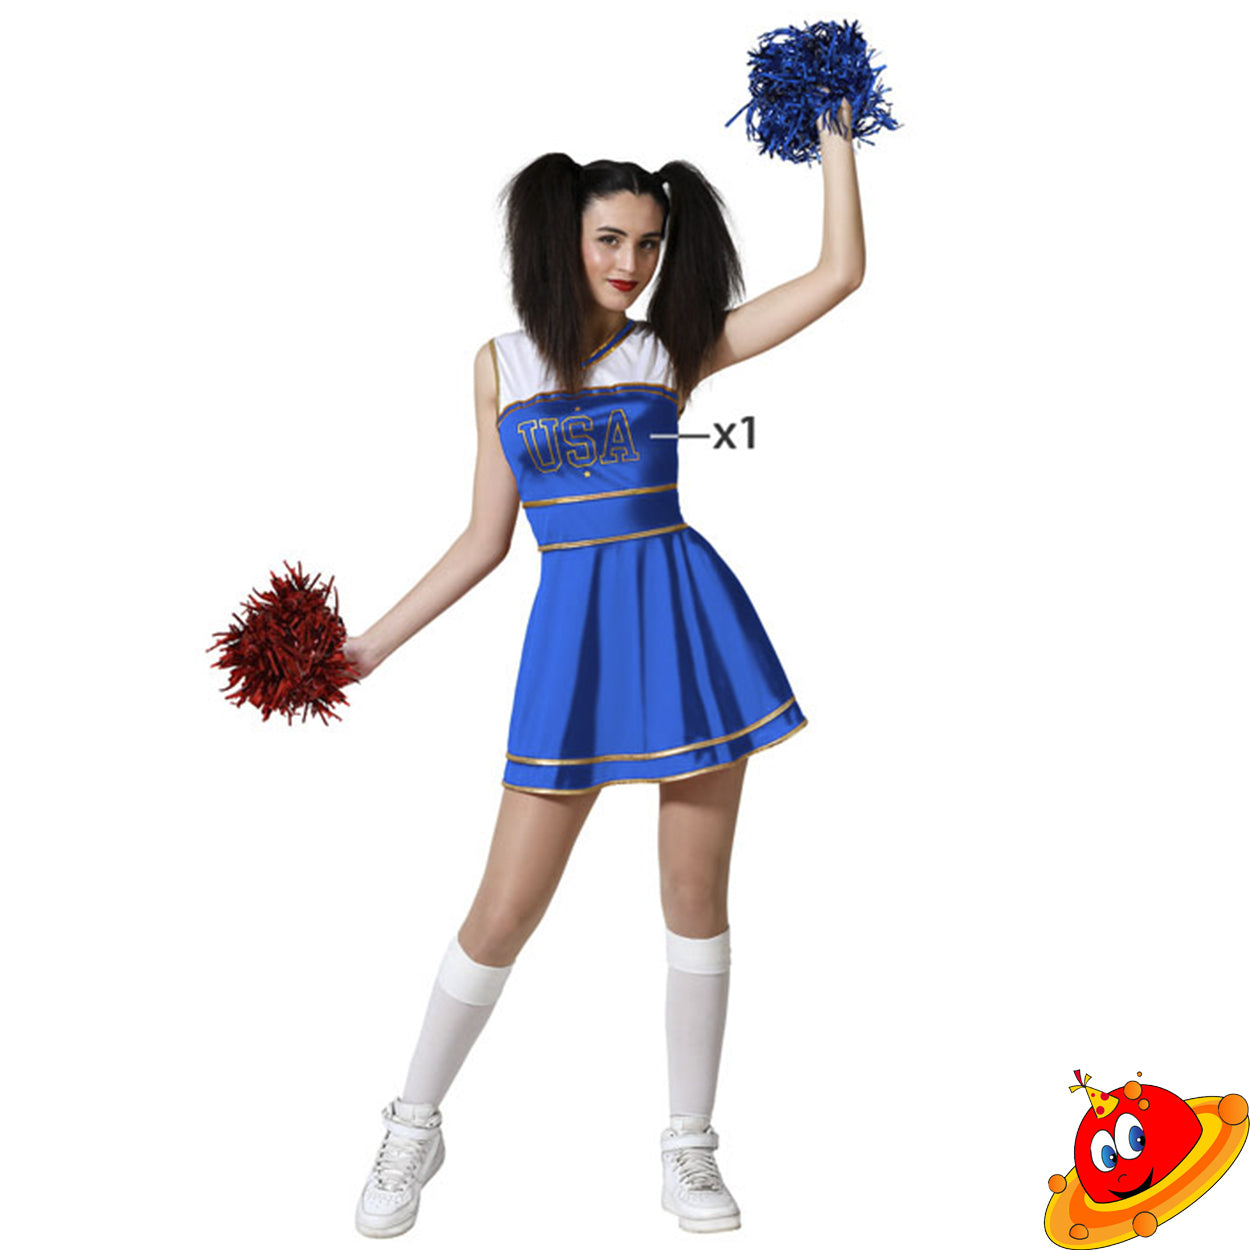 Costume Cheerleader Blu Tg 40/42